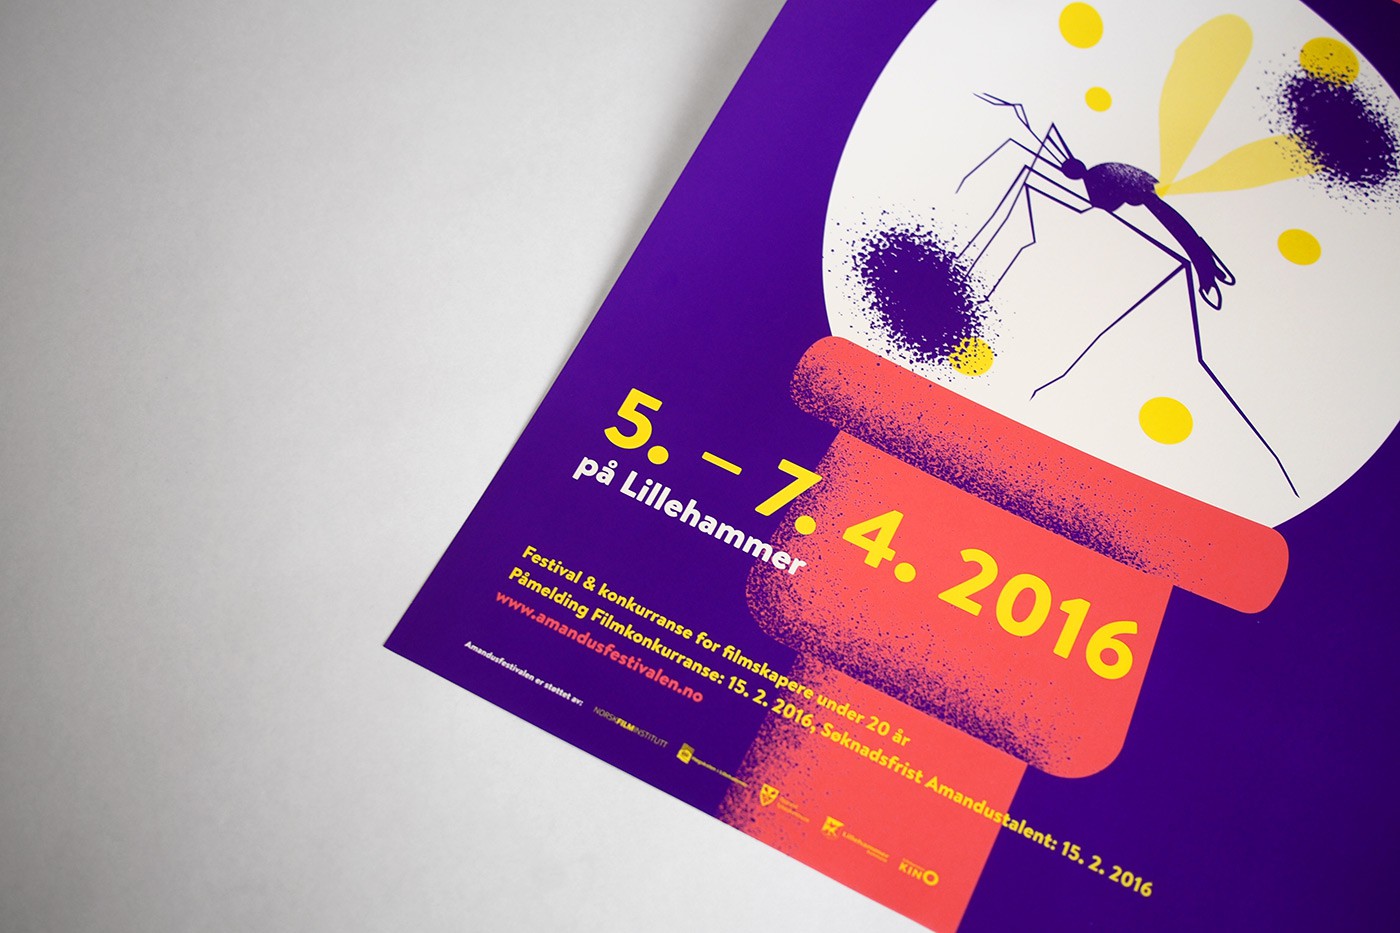 amandus 2016 poster design by upstruct